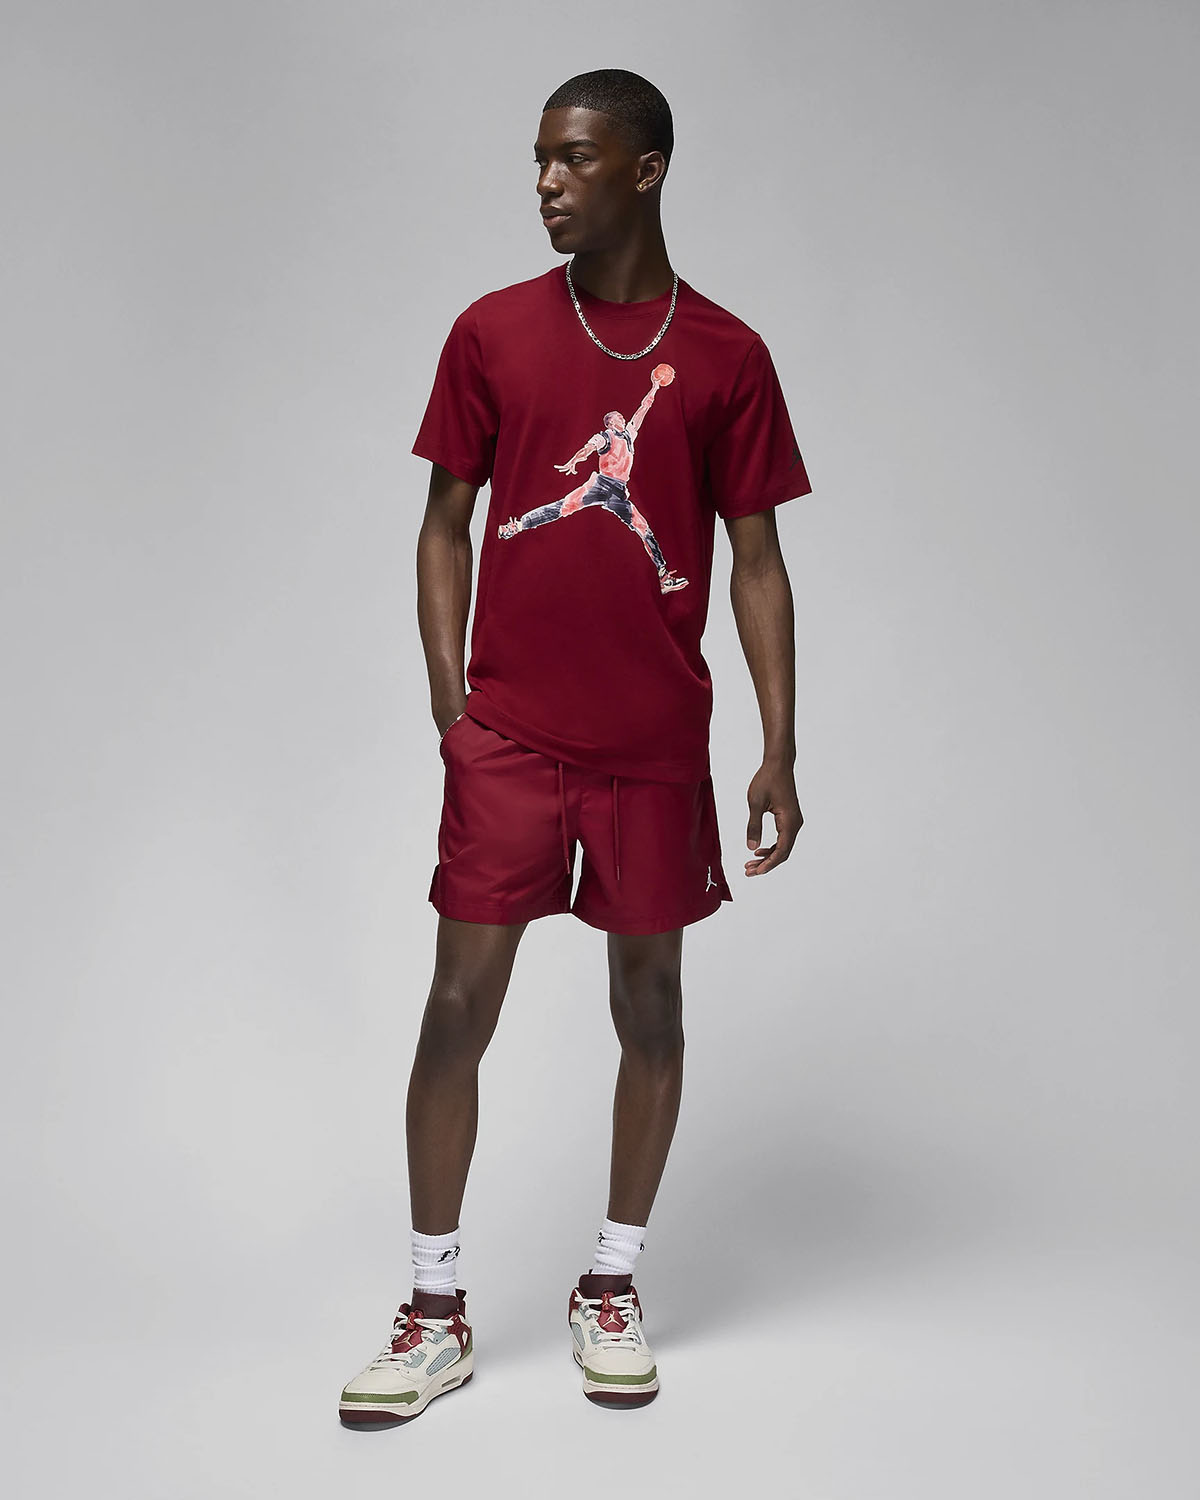 Jordan Team Red Shirt Shirts Sneakers Outfit